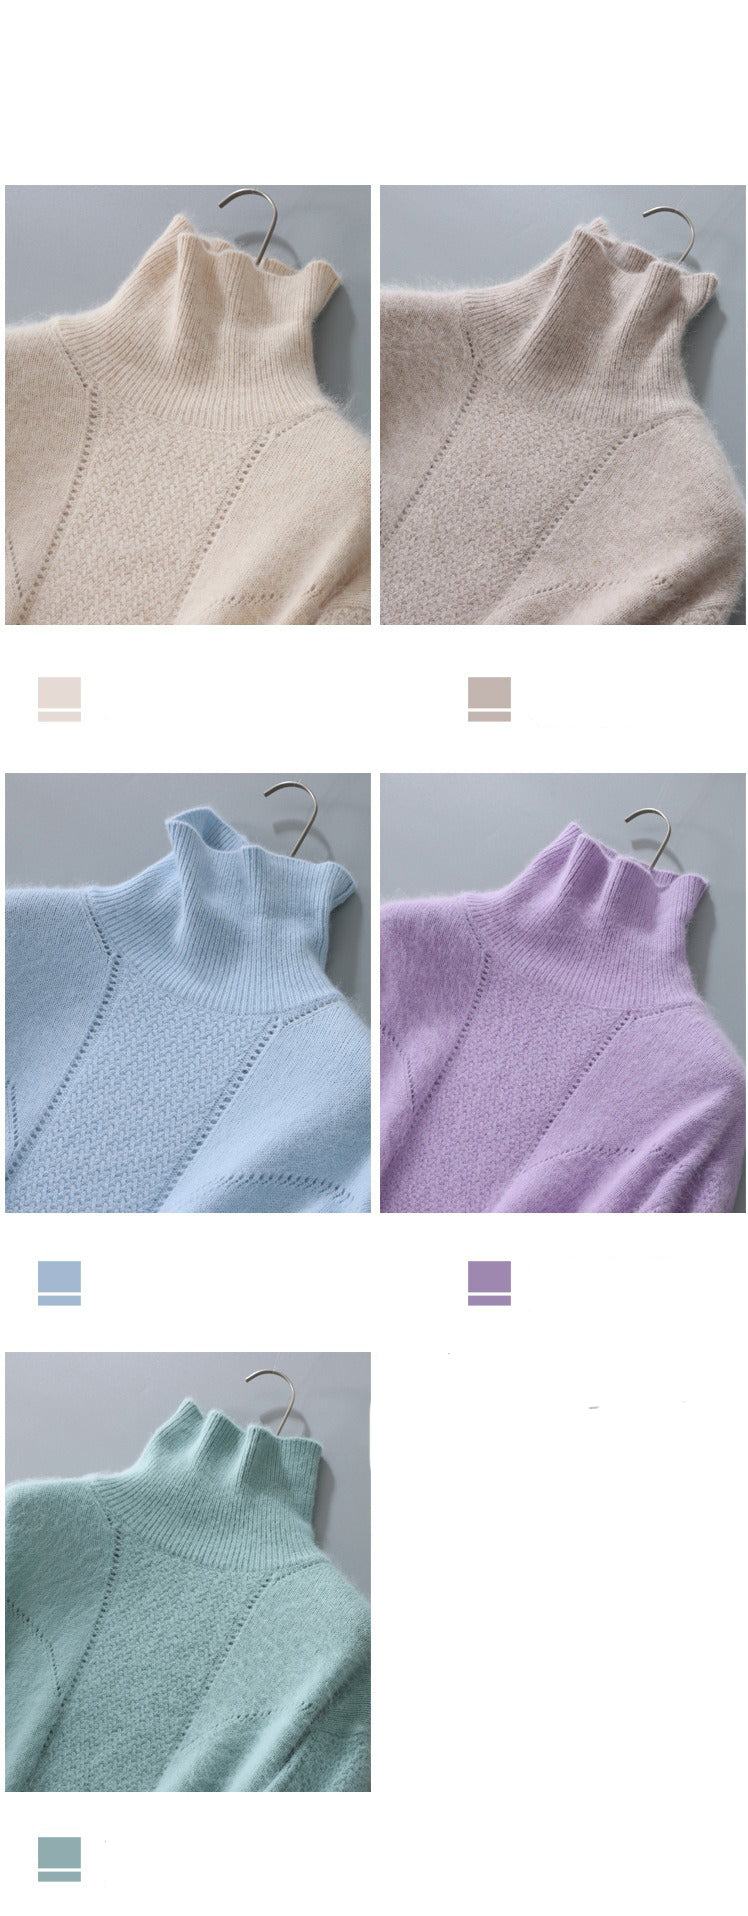 Hollow Out Pattern Sweater - Mink by Bonolu